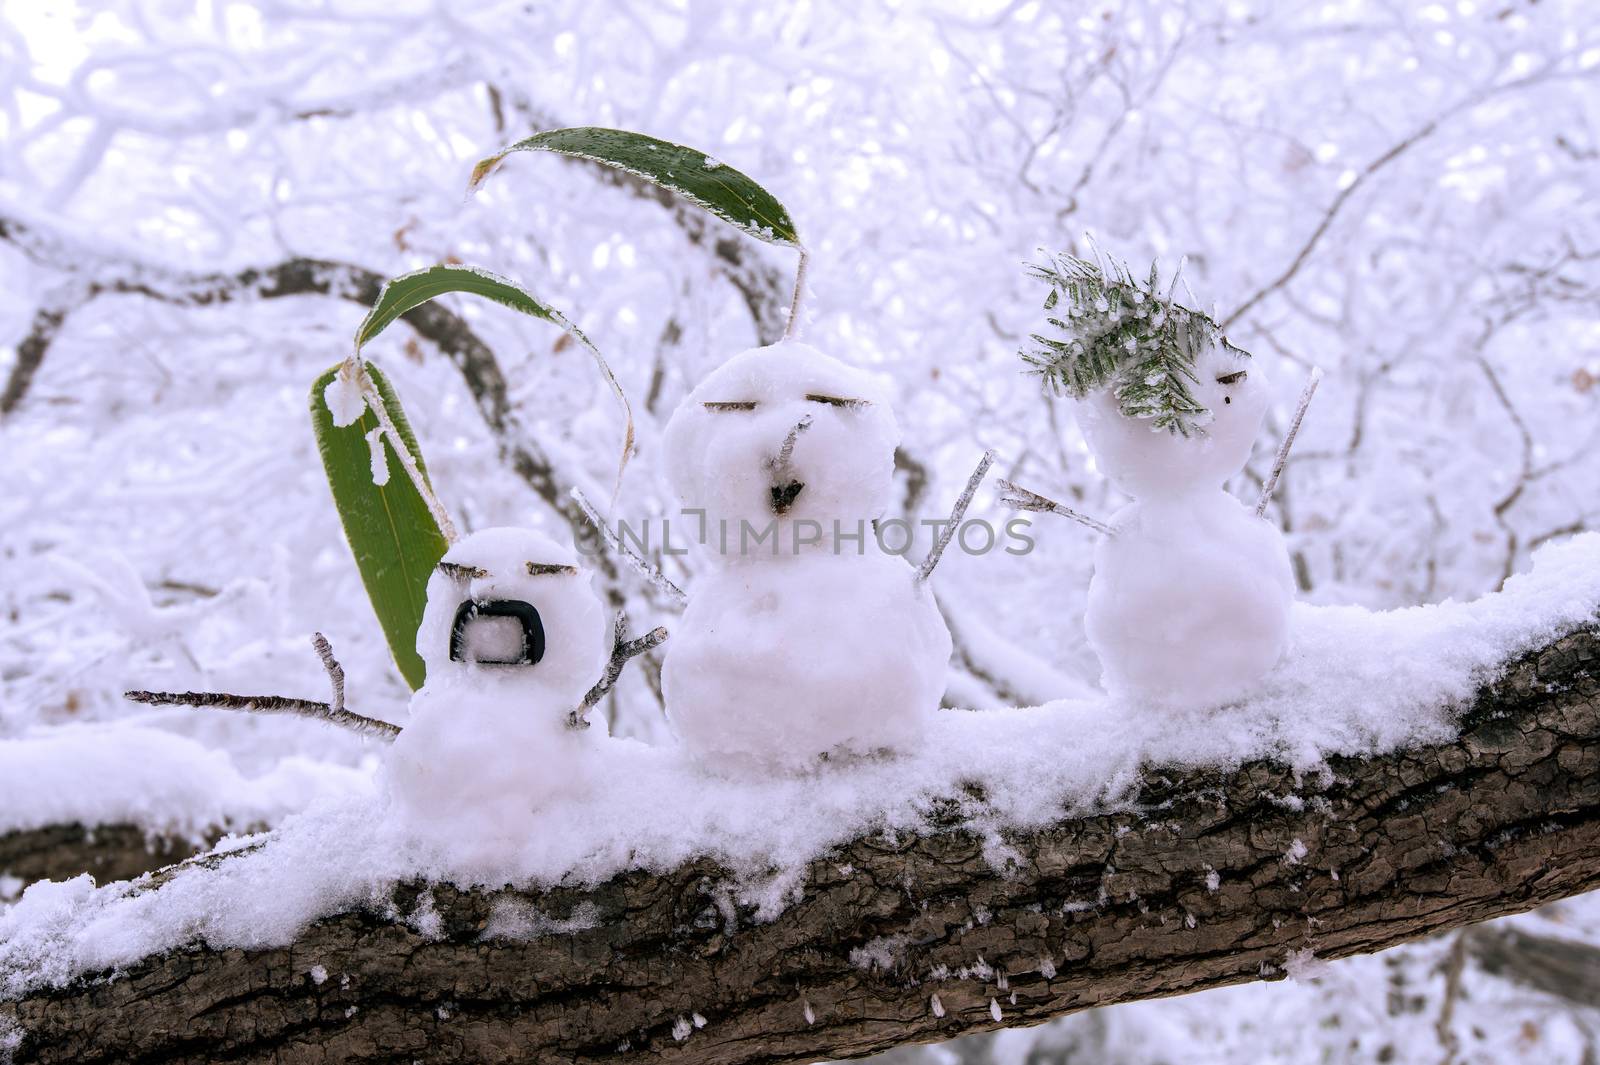 Snowman by gutarphotoghaphy